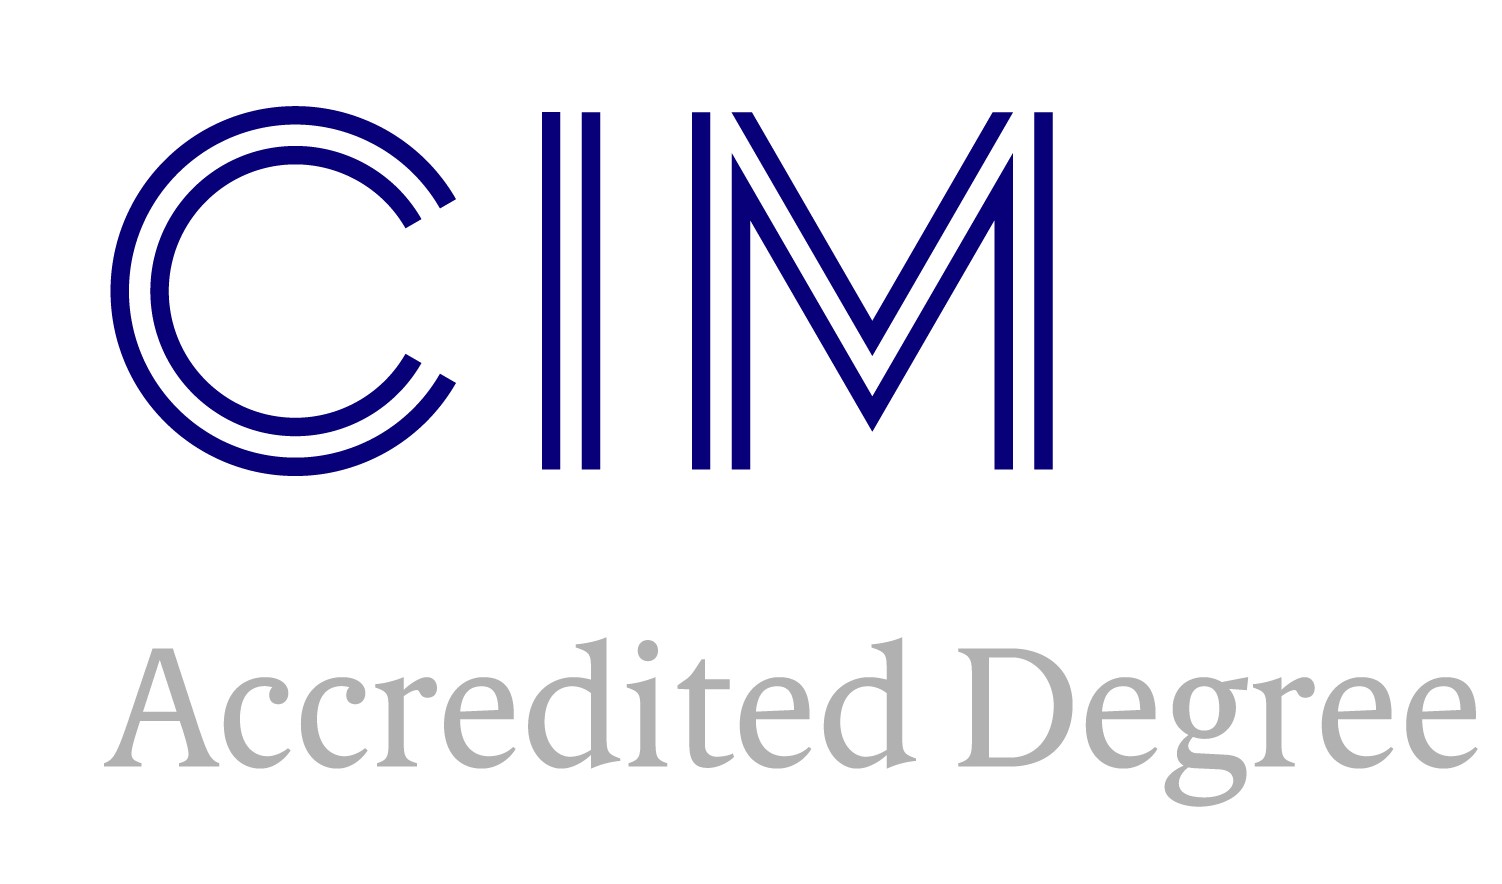 CIM Accredited Degree